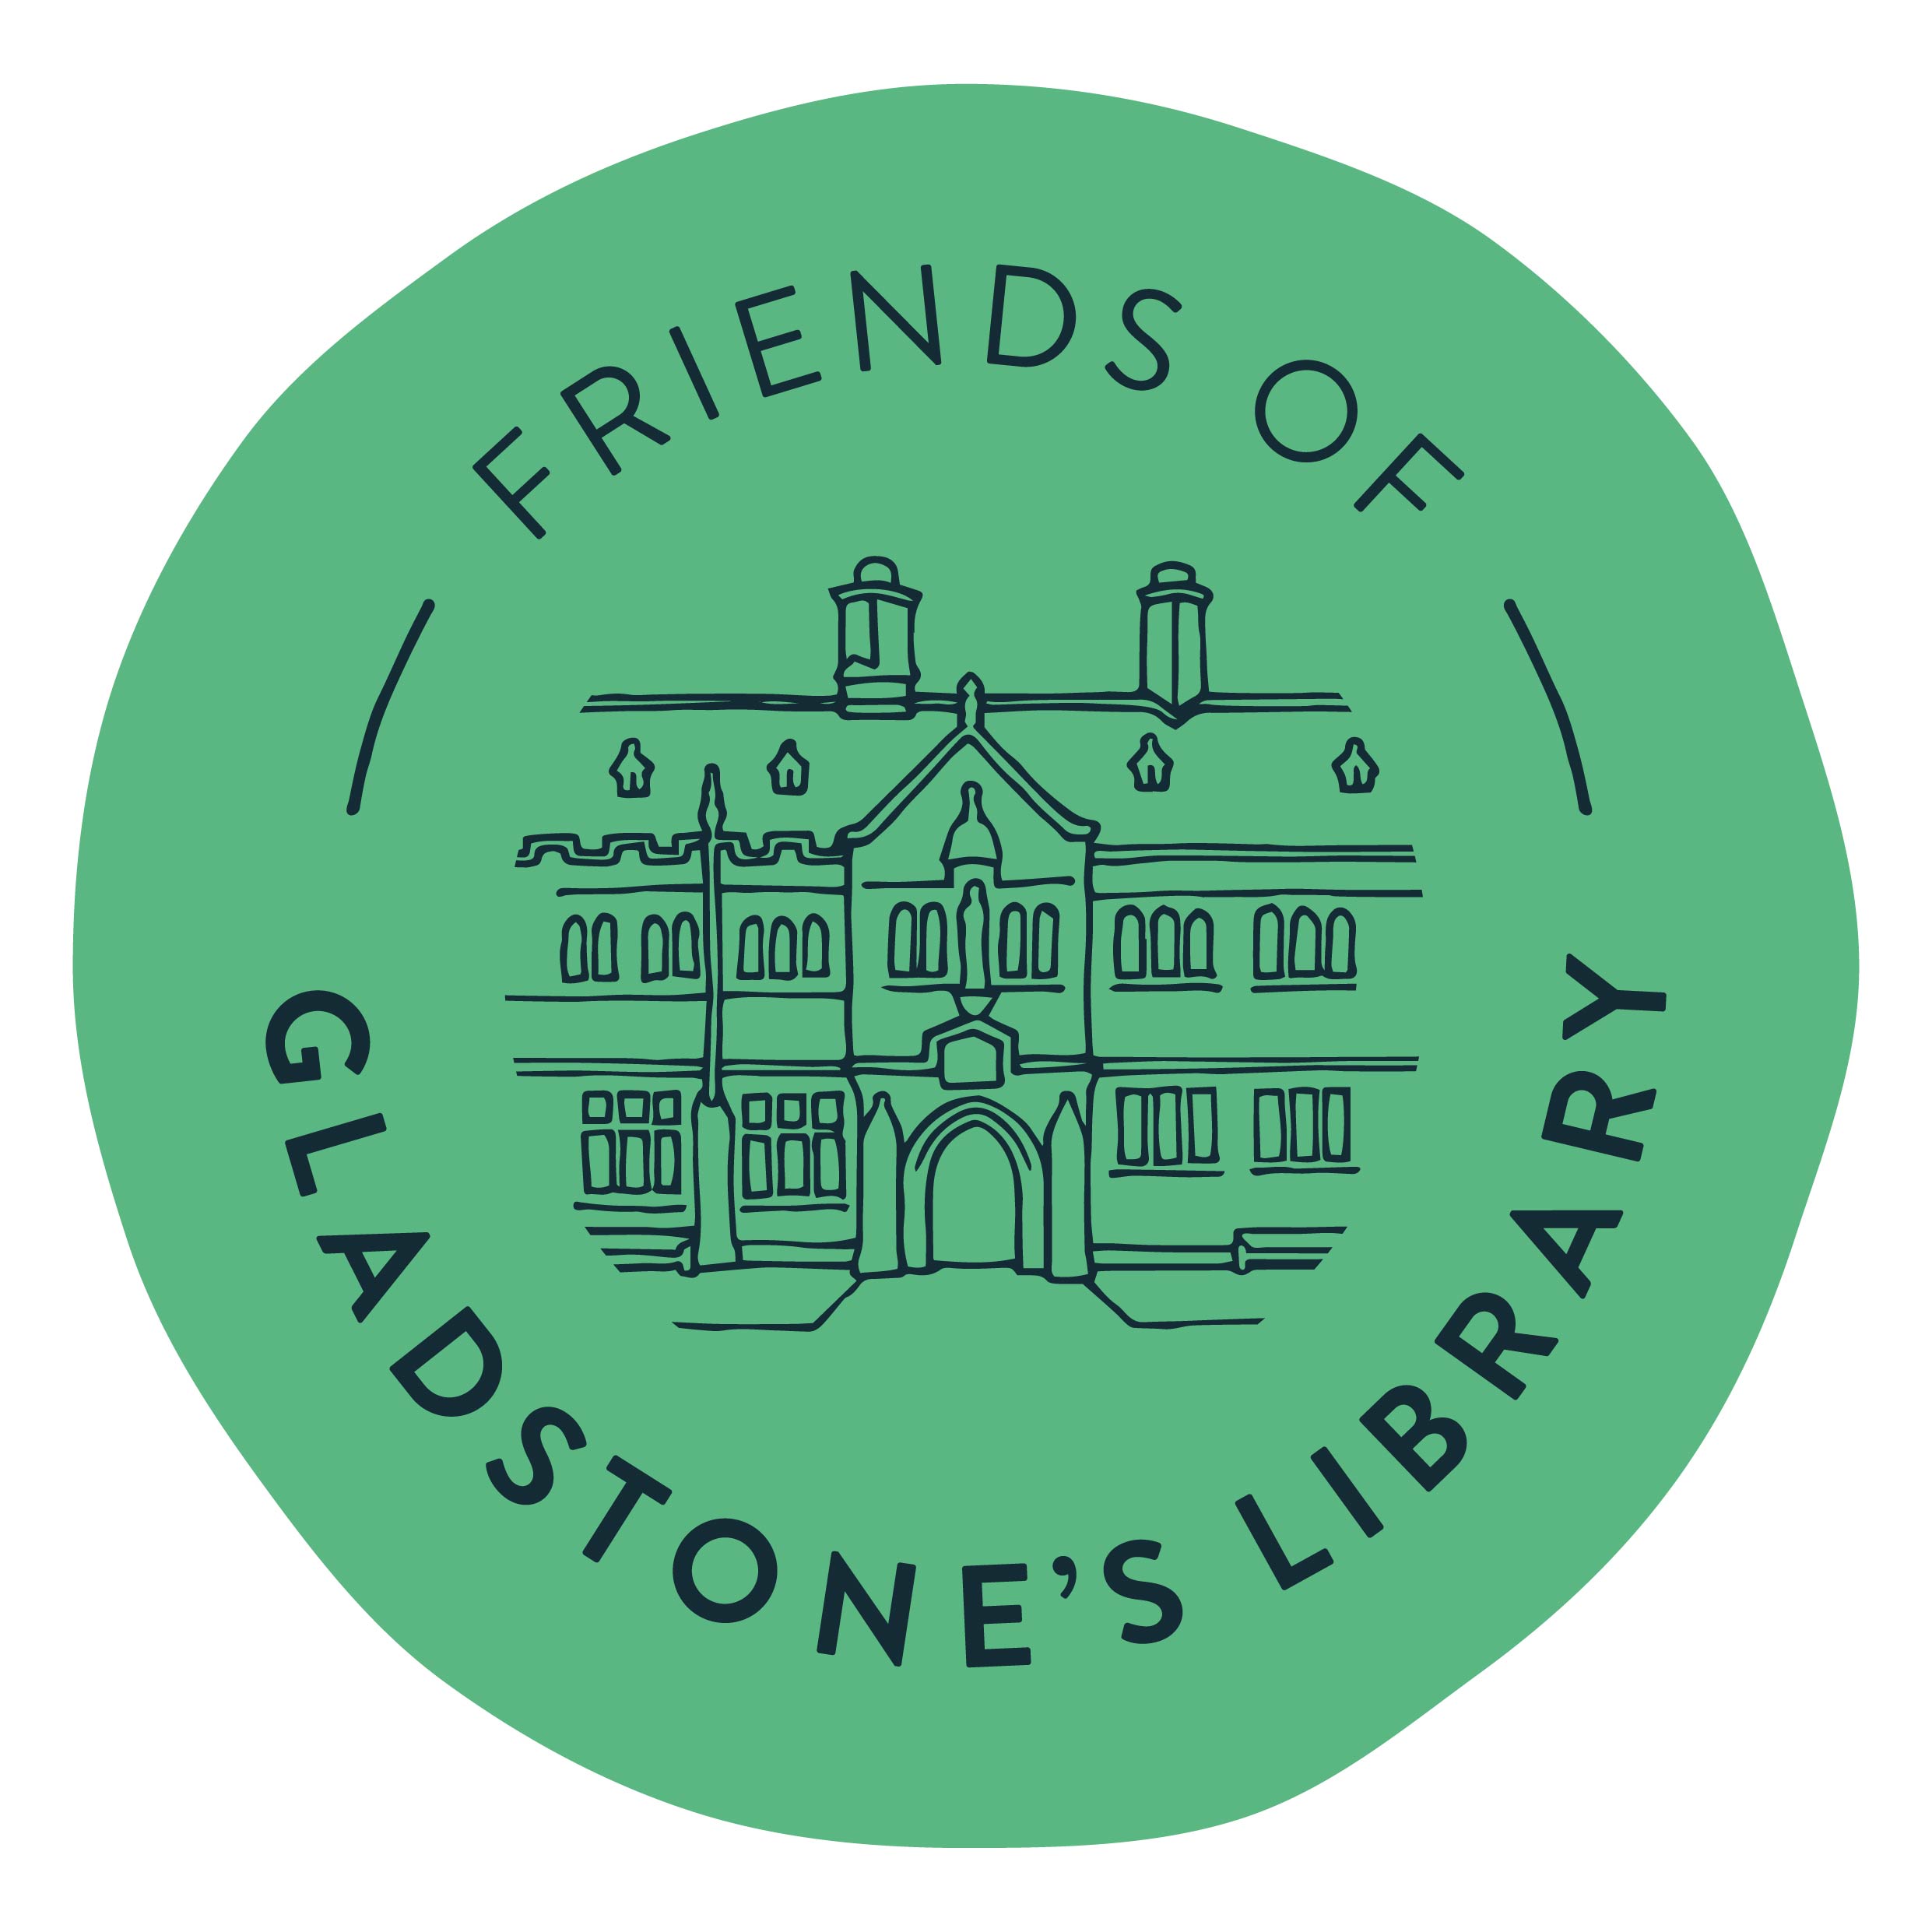 Gladstone's Library